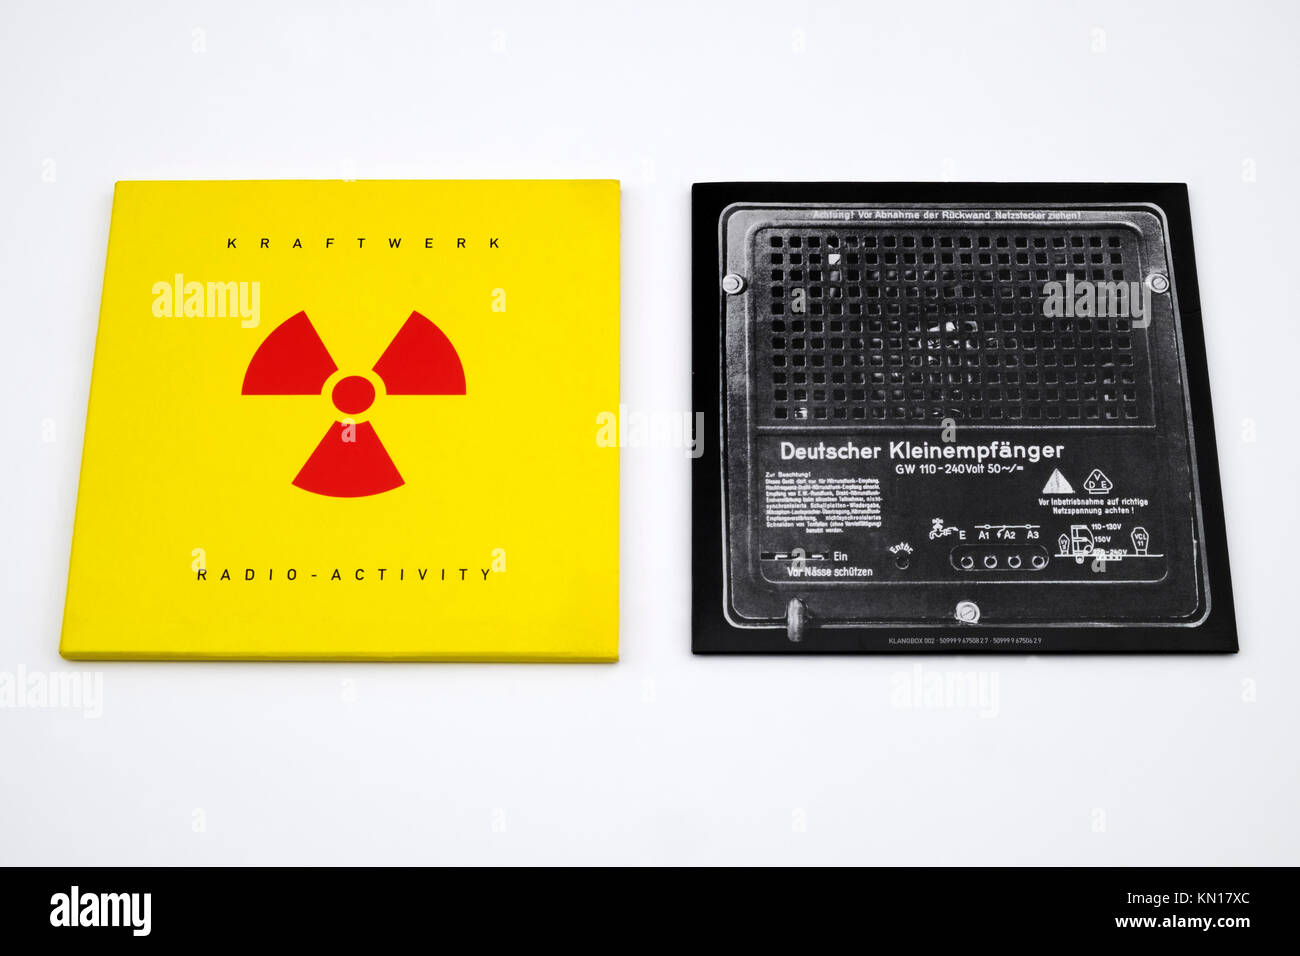 Kraftwerk radio activity cd hi-res stock photography and images - Alamy